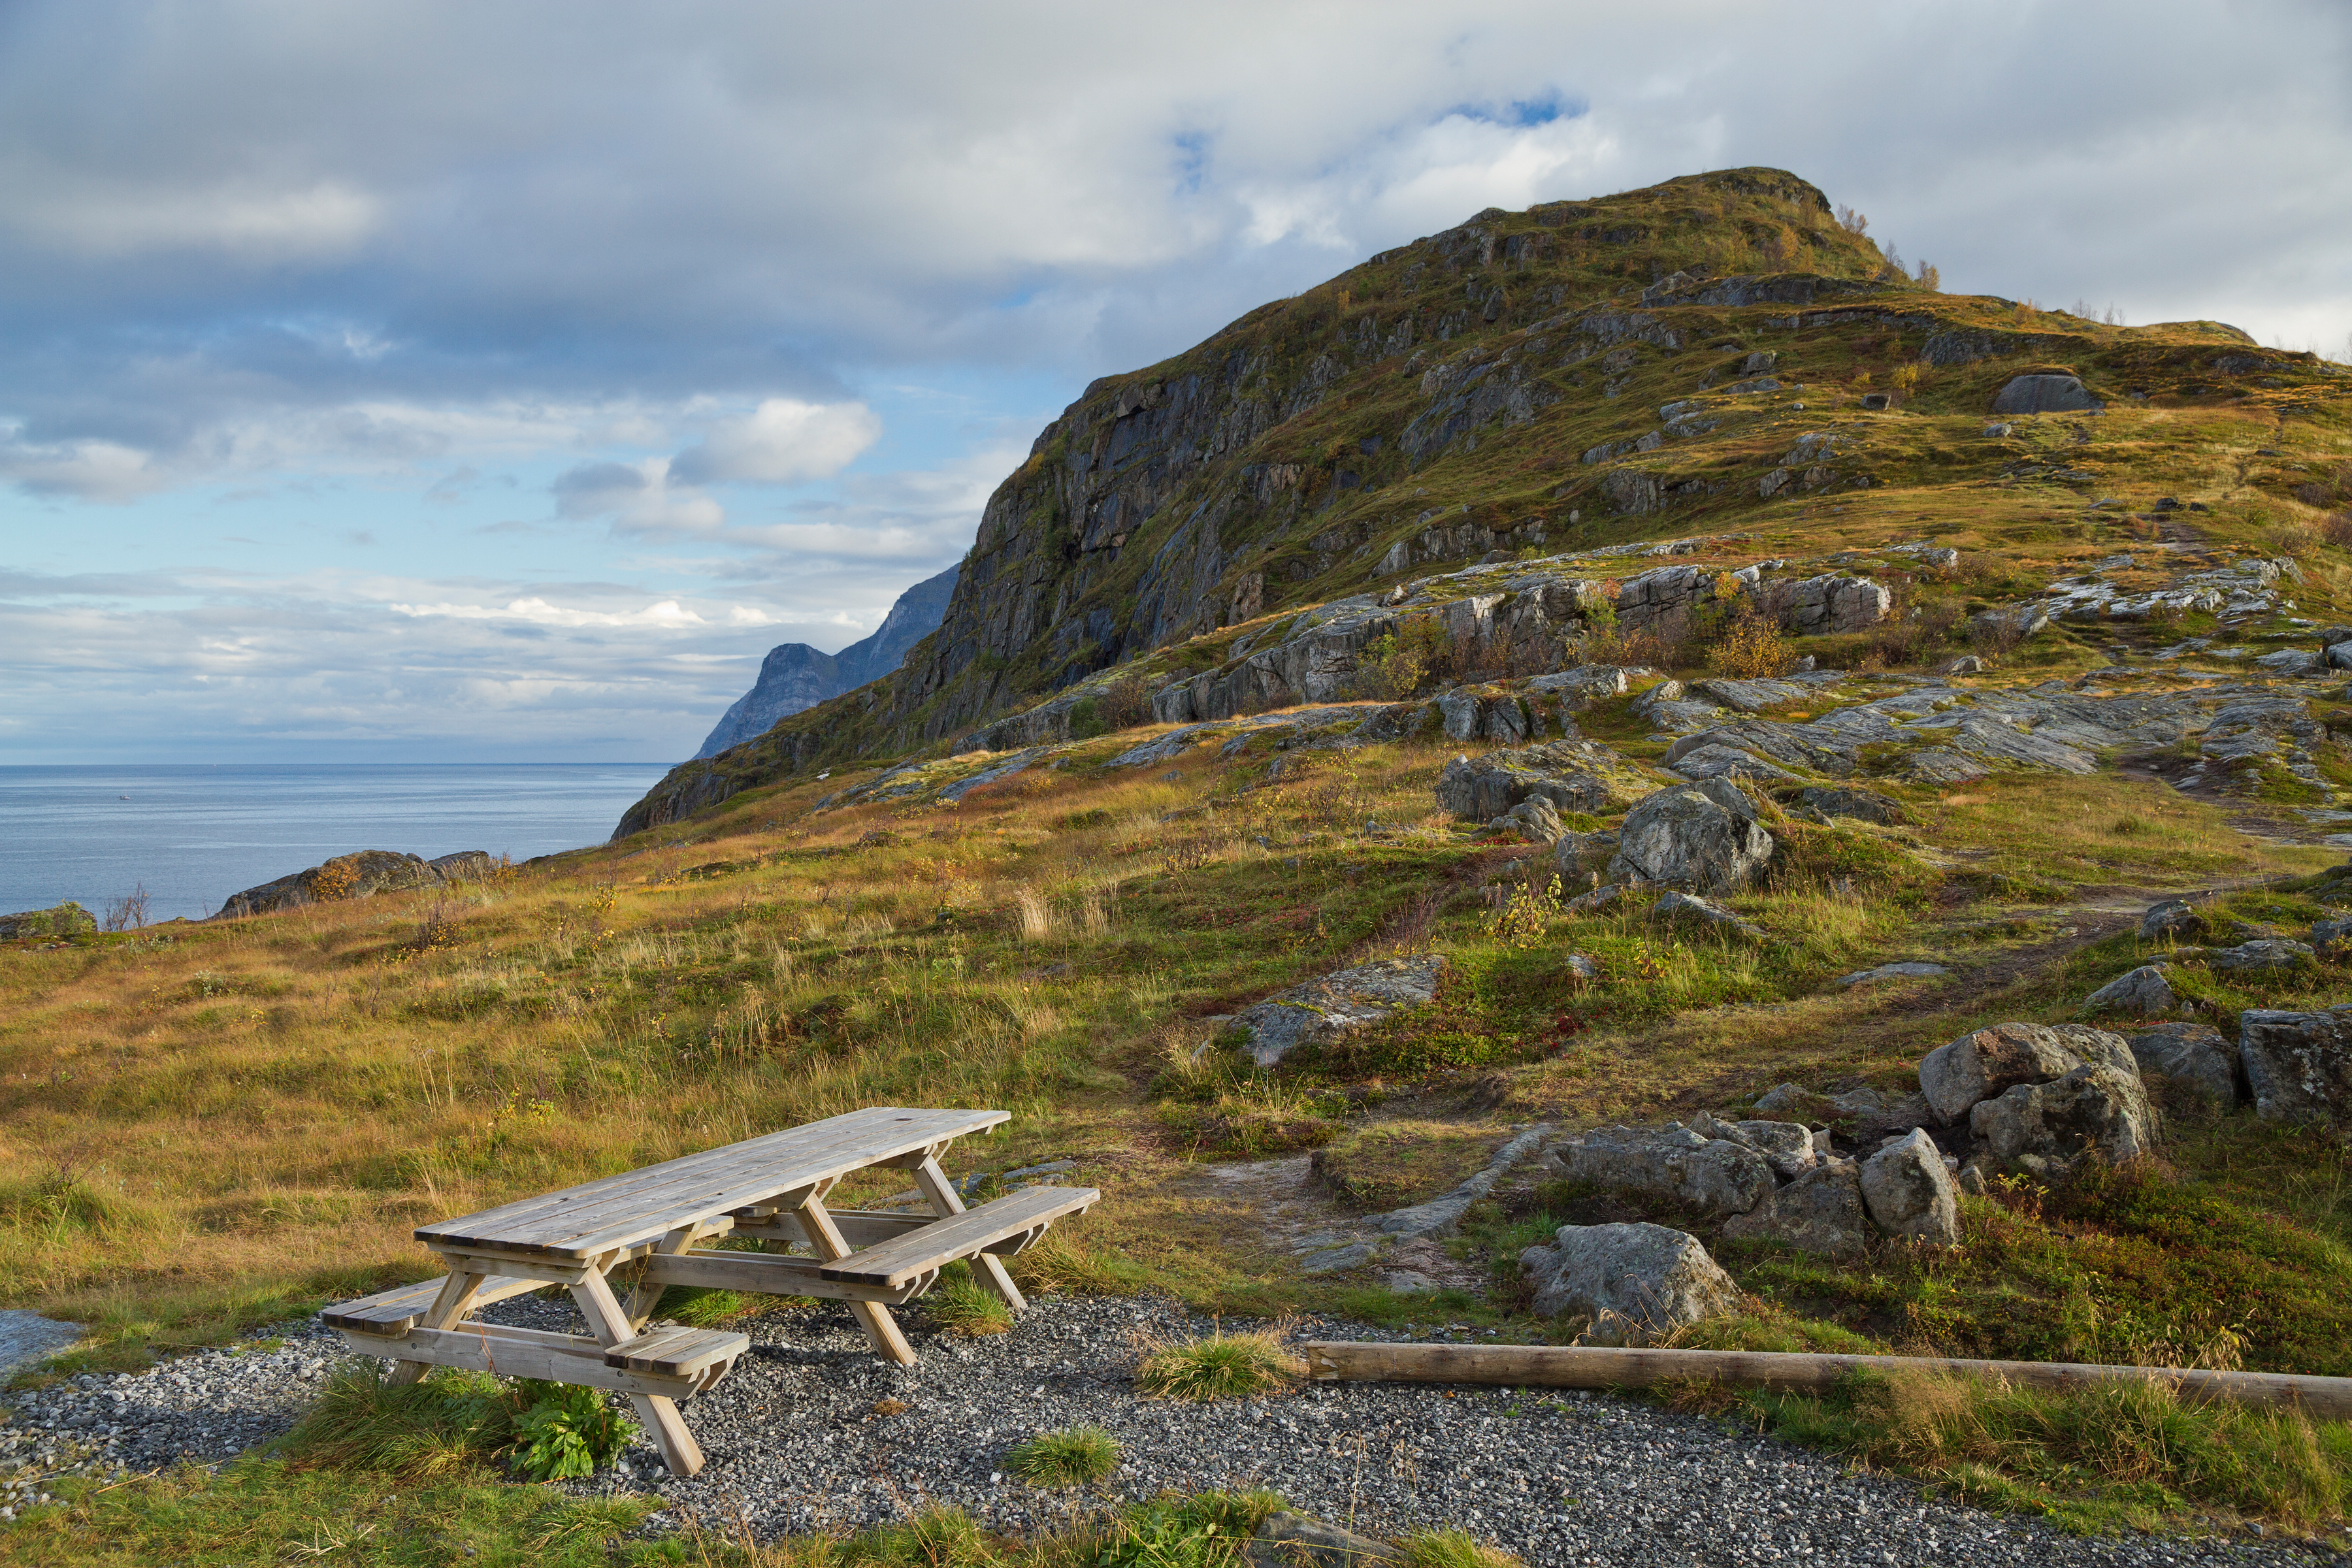 Picnic table at Knuten, Senja, Troms, Norway, 2015 September